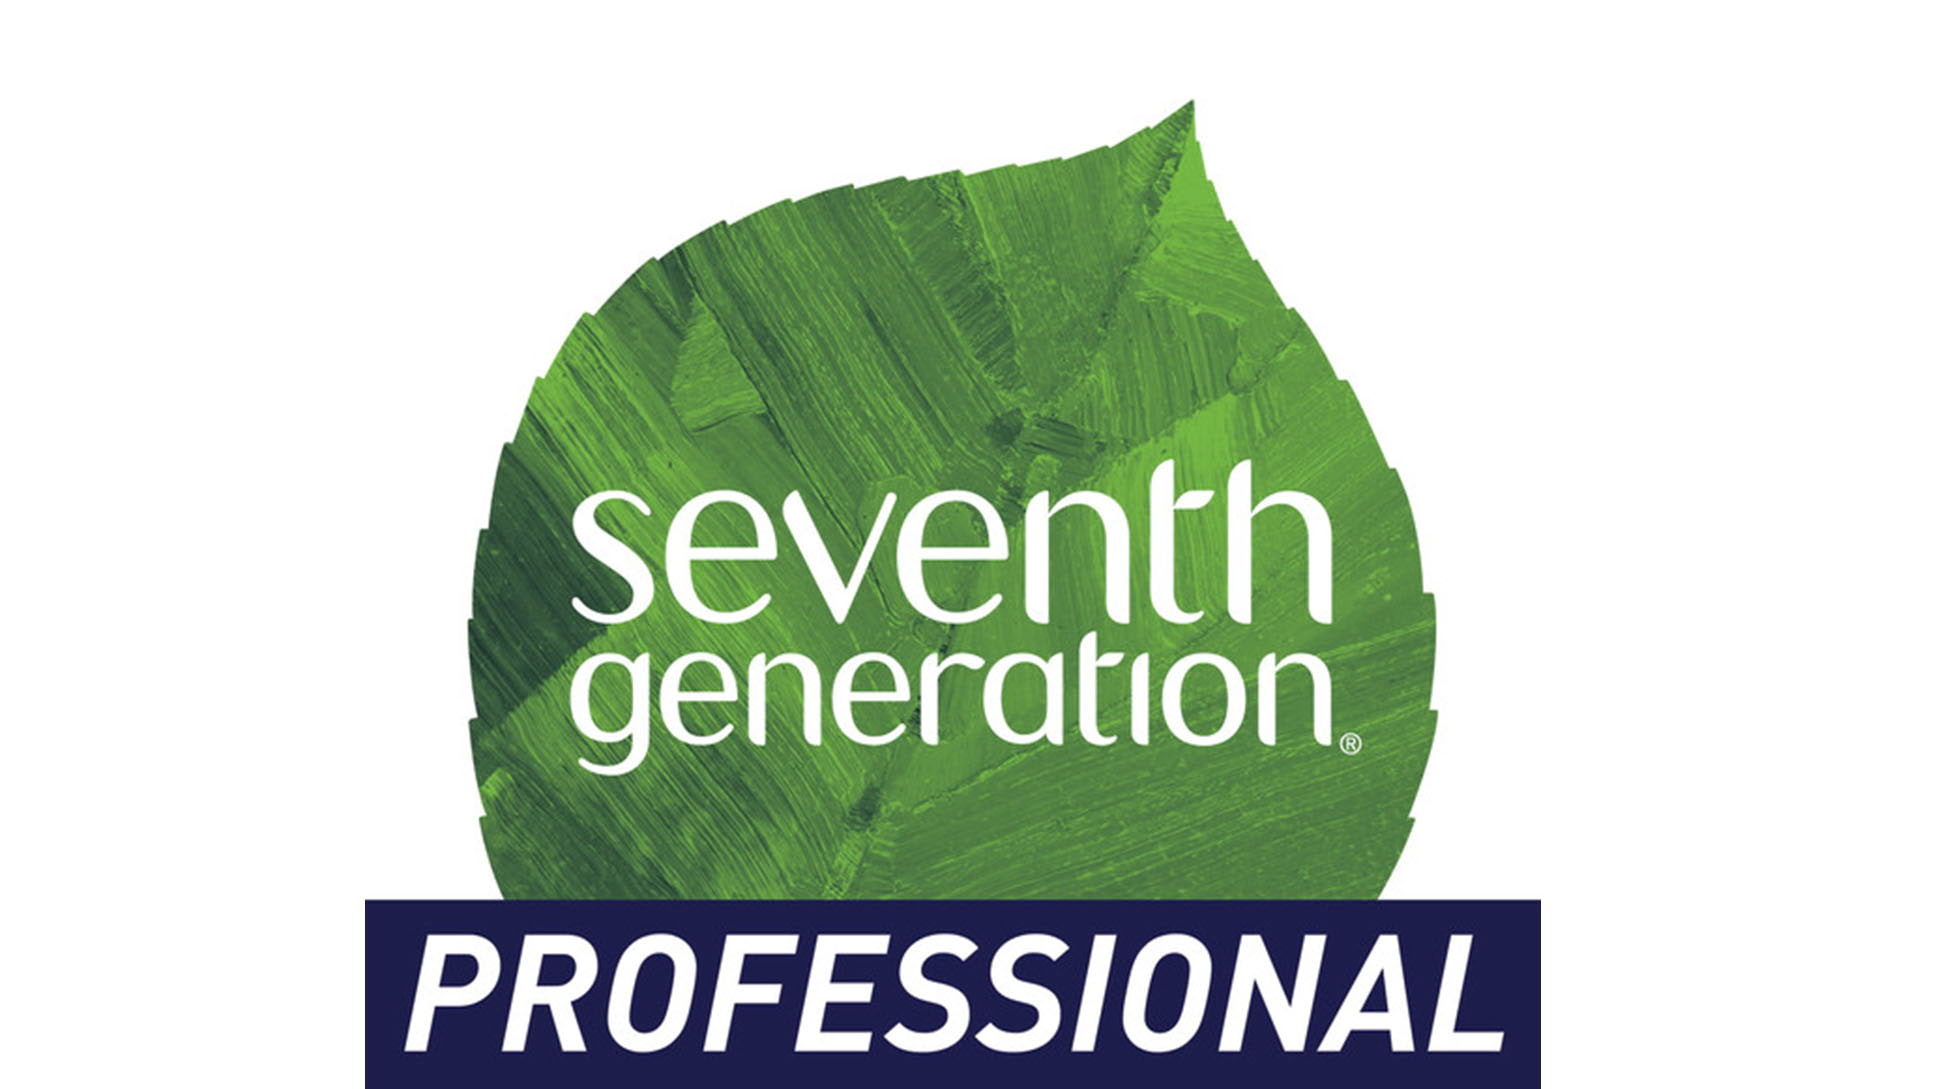 Seventh Generation Sponsorship Logo